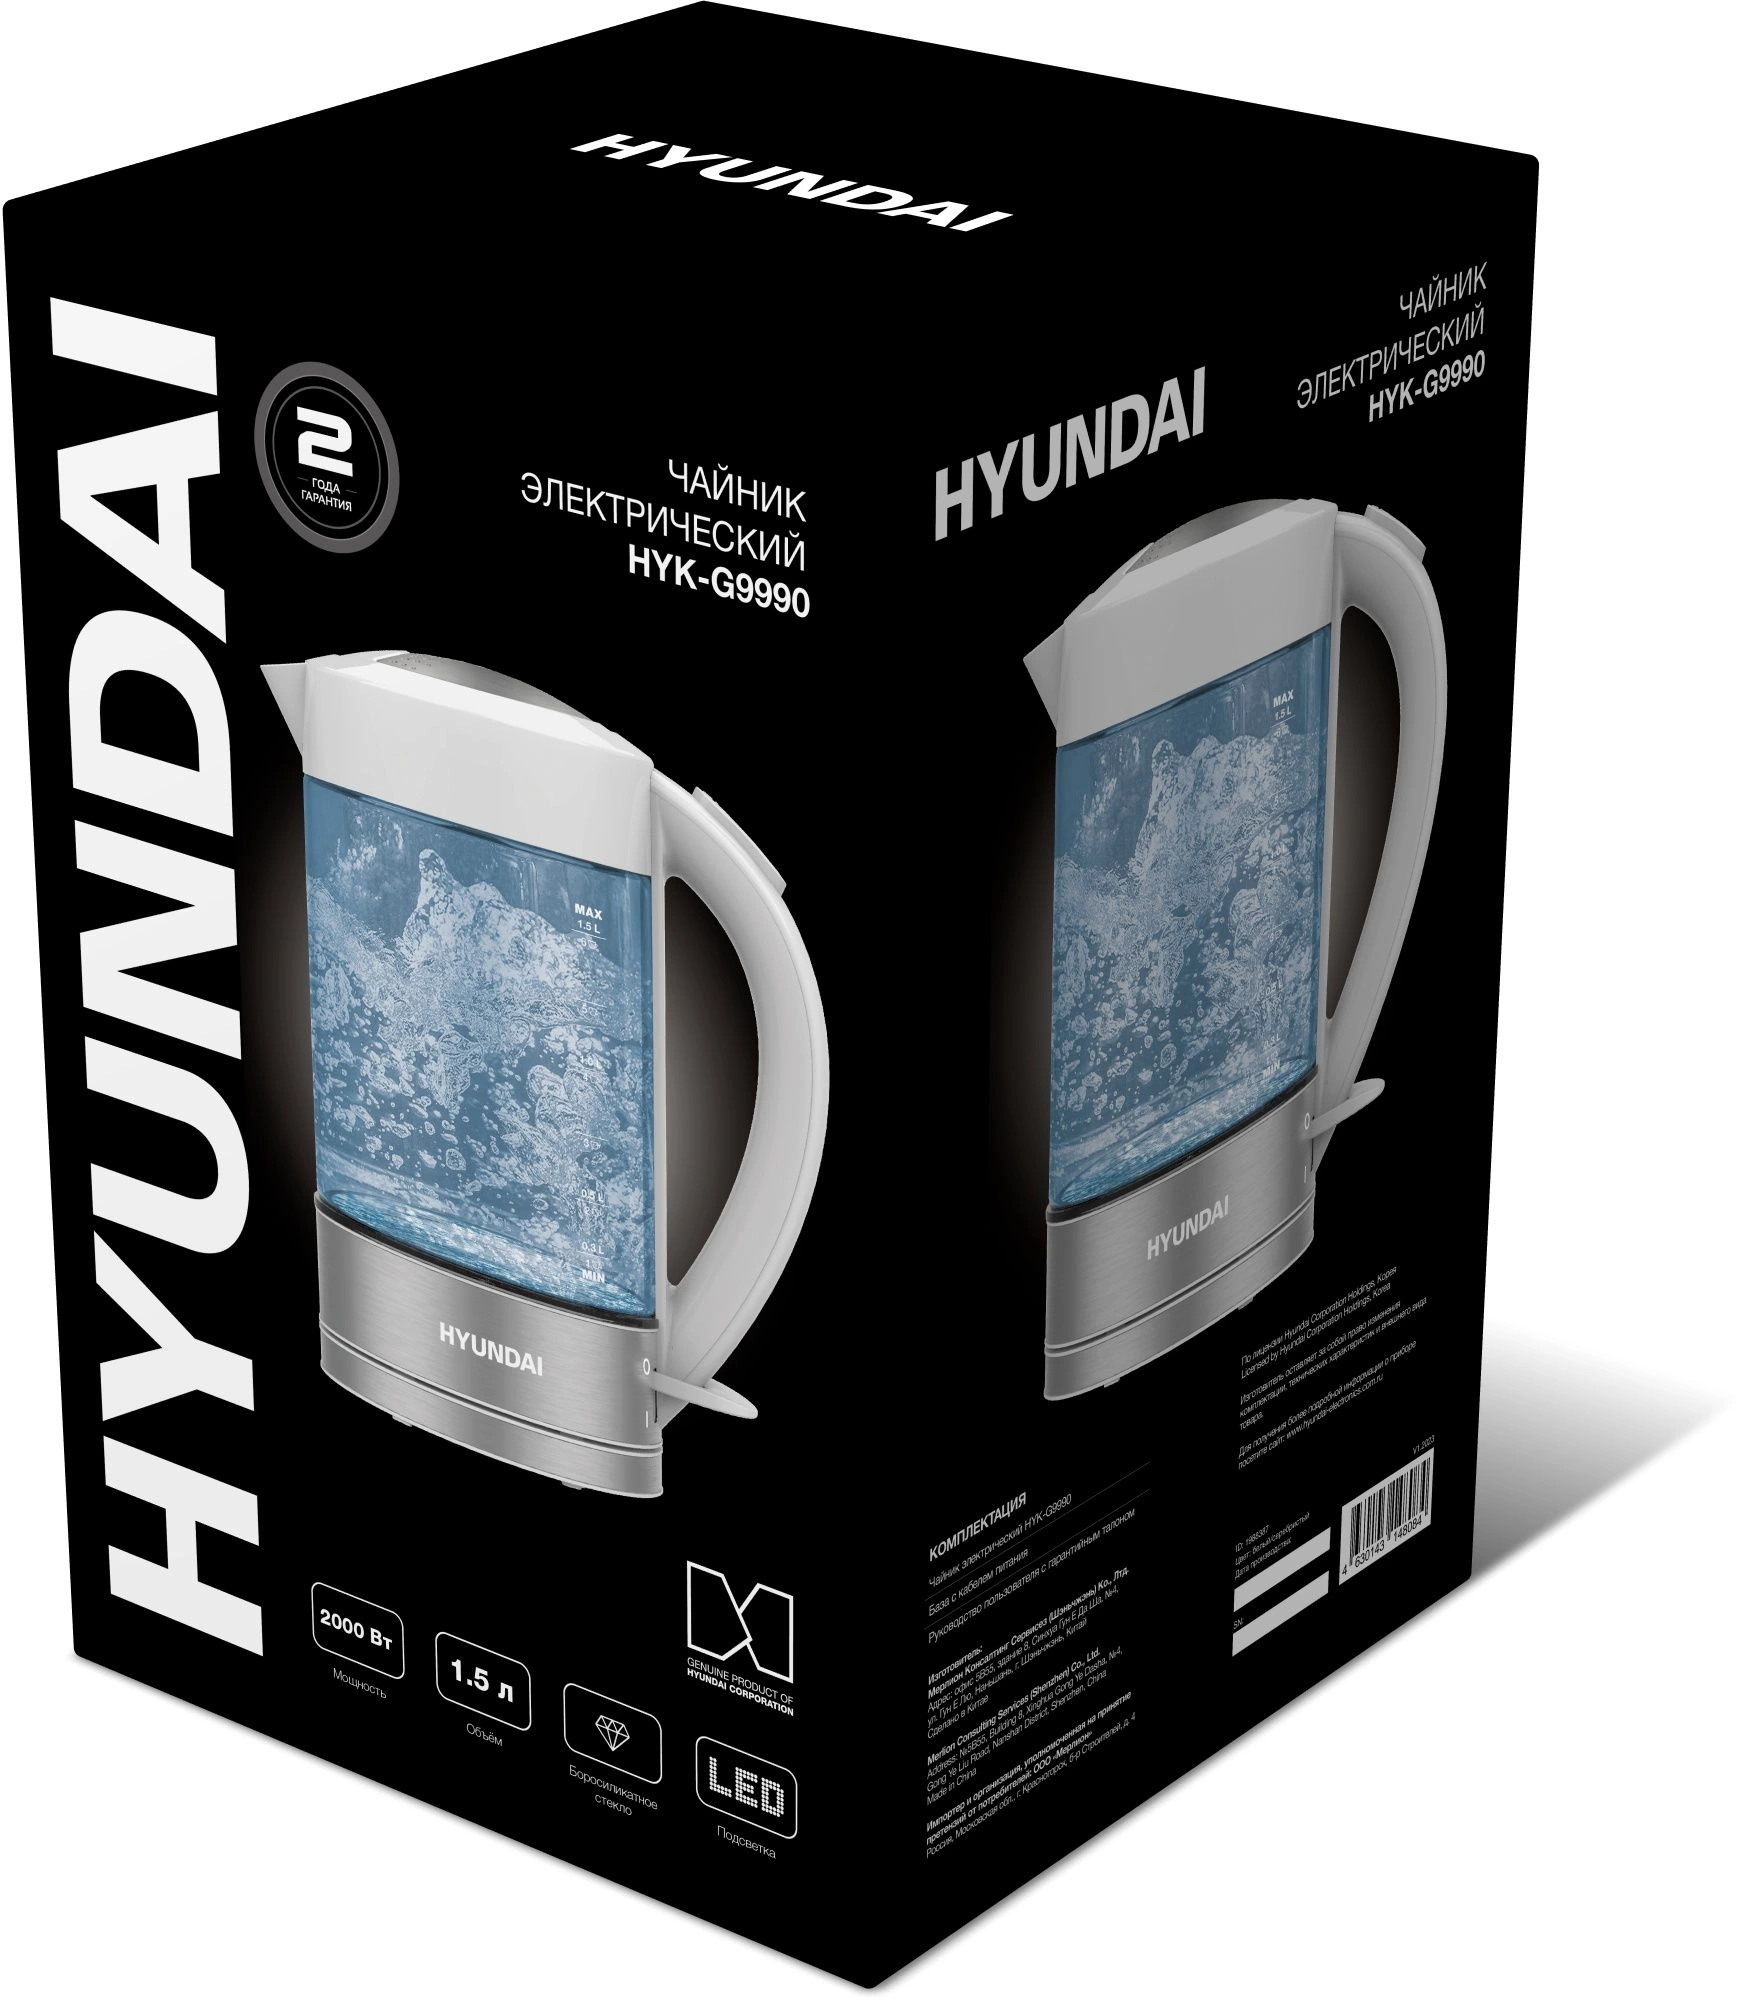 Чайник электрический Hyundai HYK-G9990 1.5л. 2000Вт белый/серебристый корпус: стекло